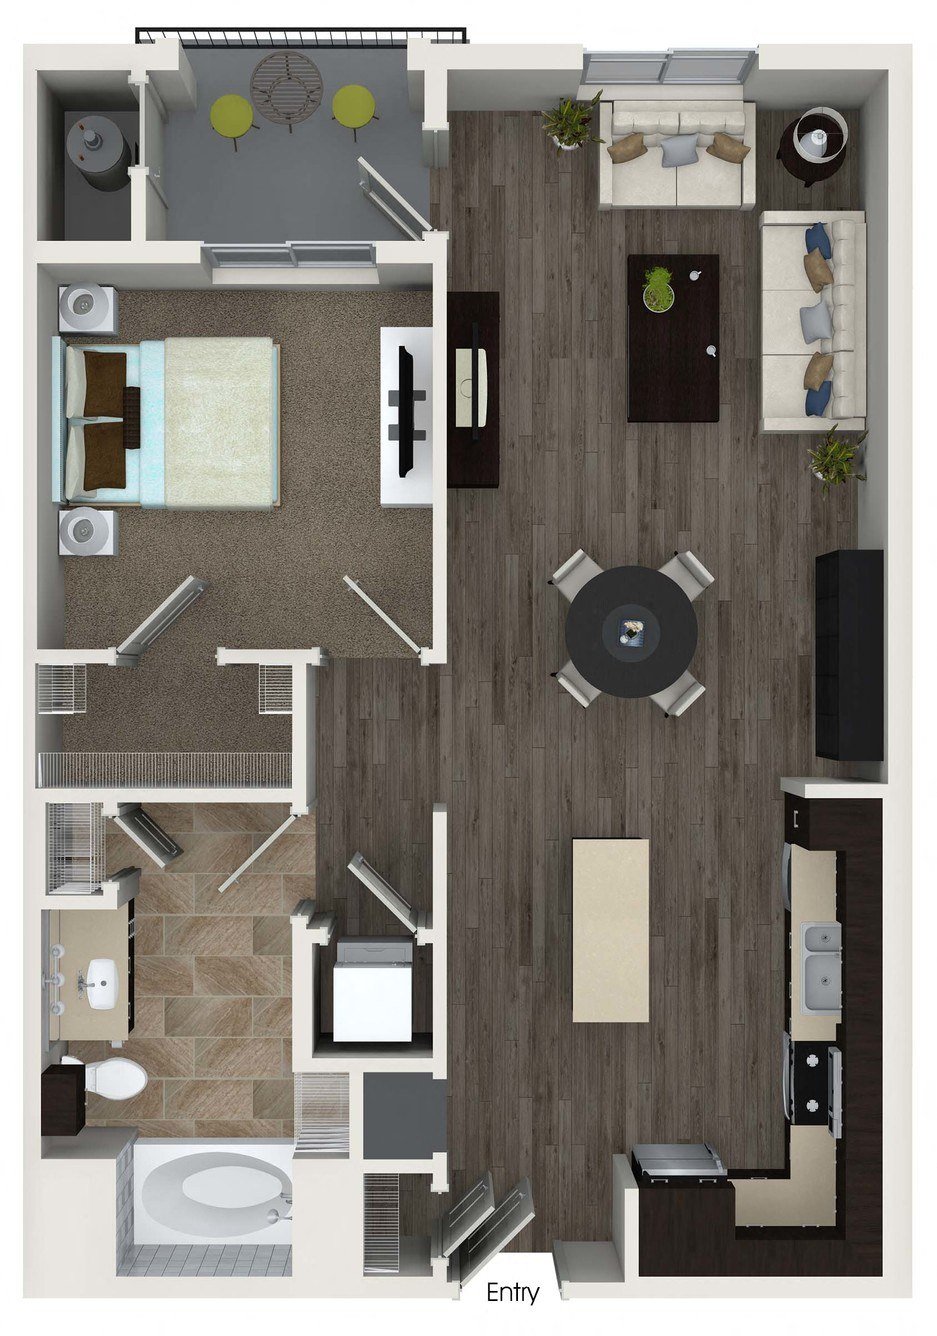 A2a Floorplan Image